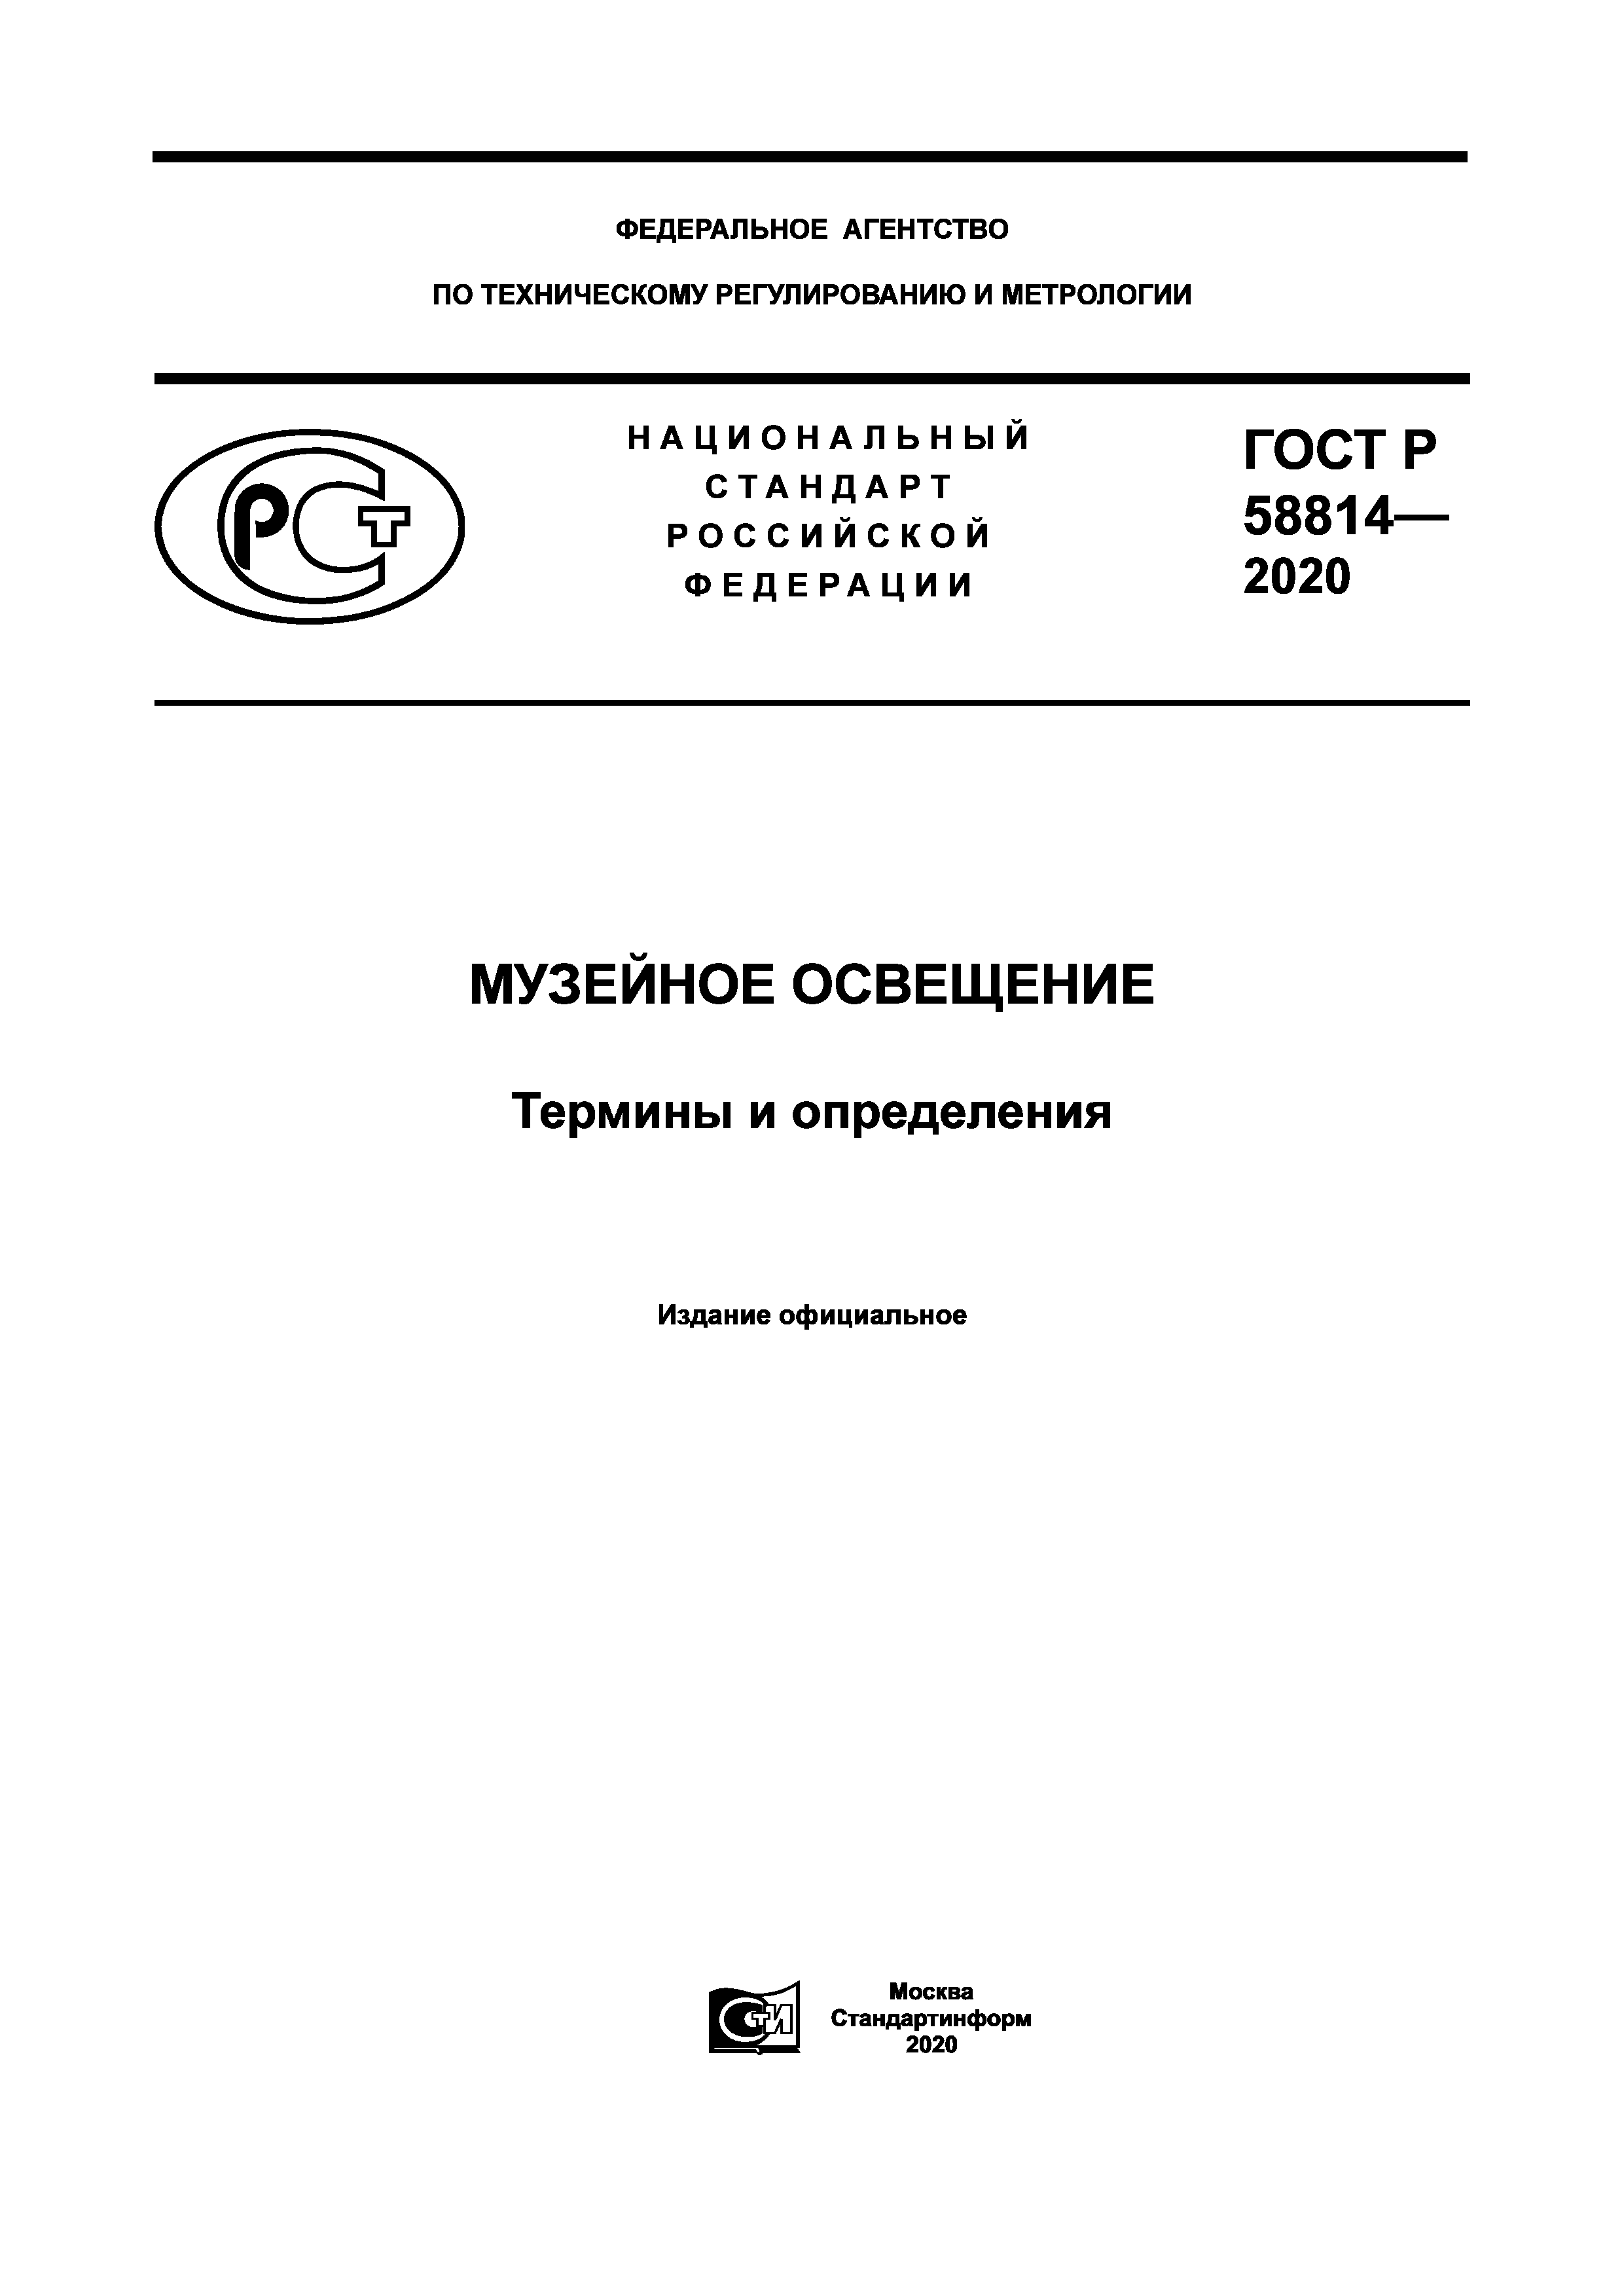 ГОСТ Р 58814-2020